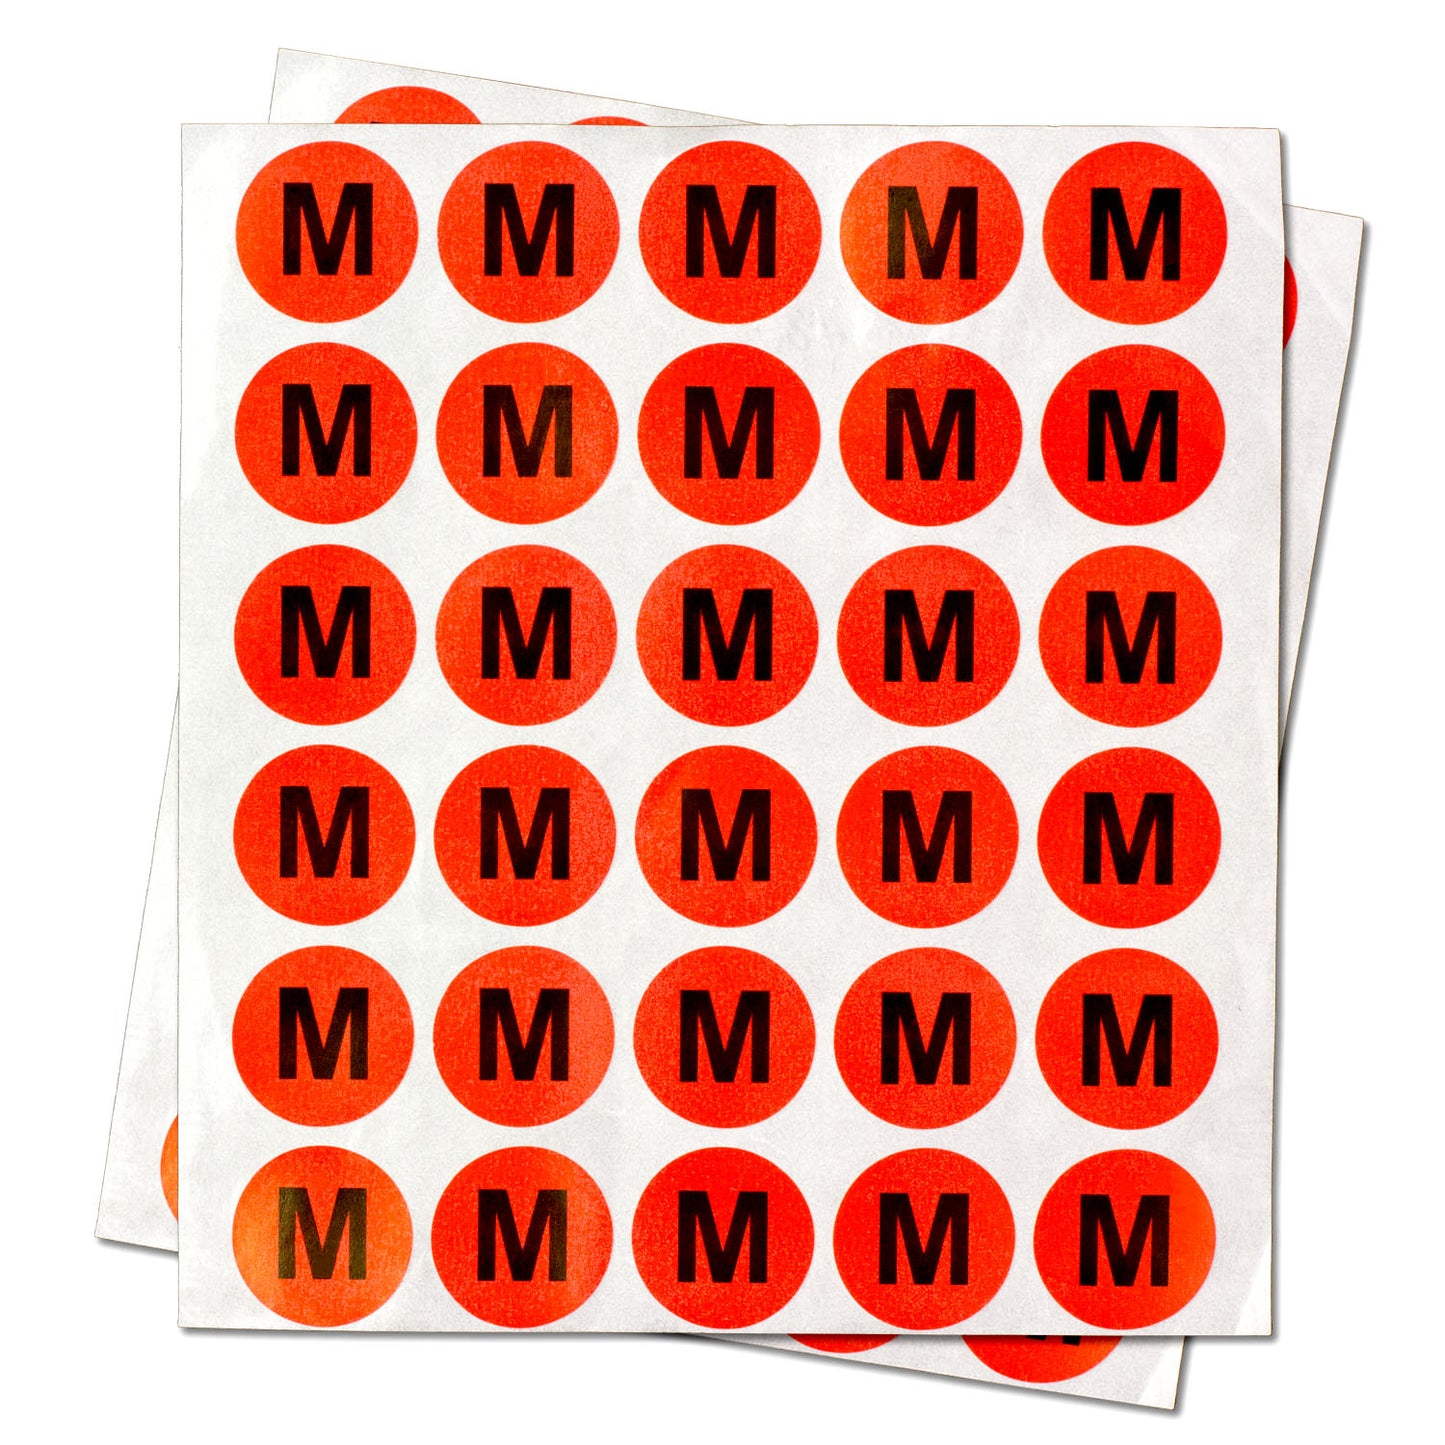 0.78 inch | Clothing Size: Medium (M) Stickers